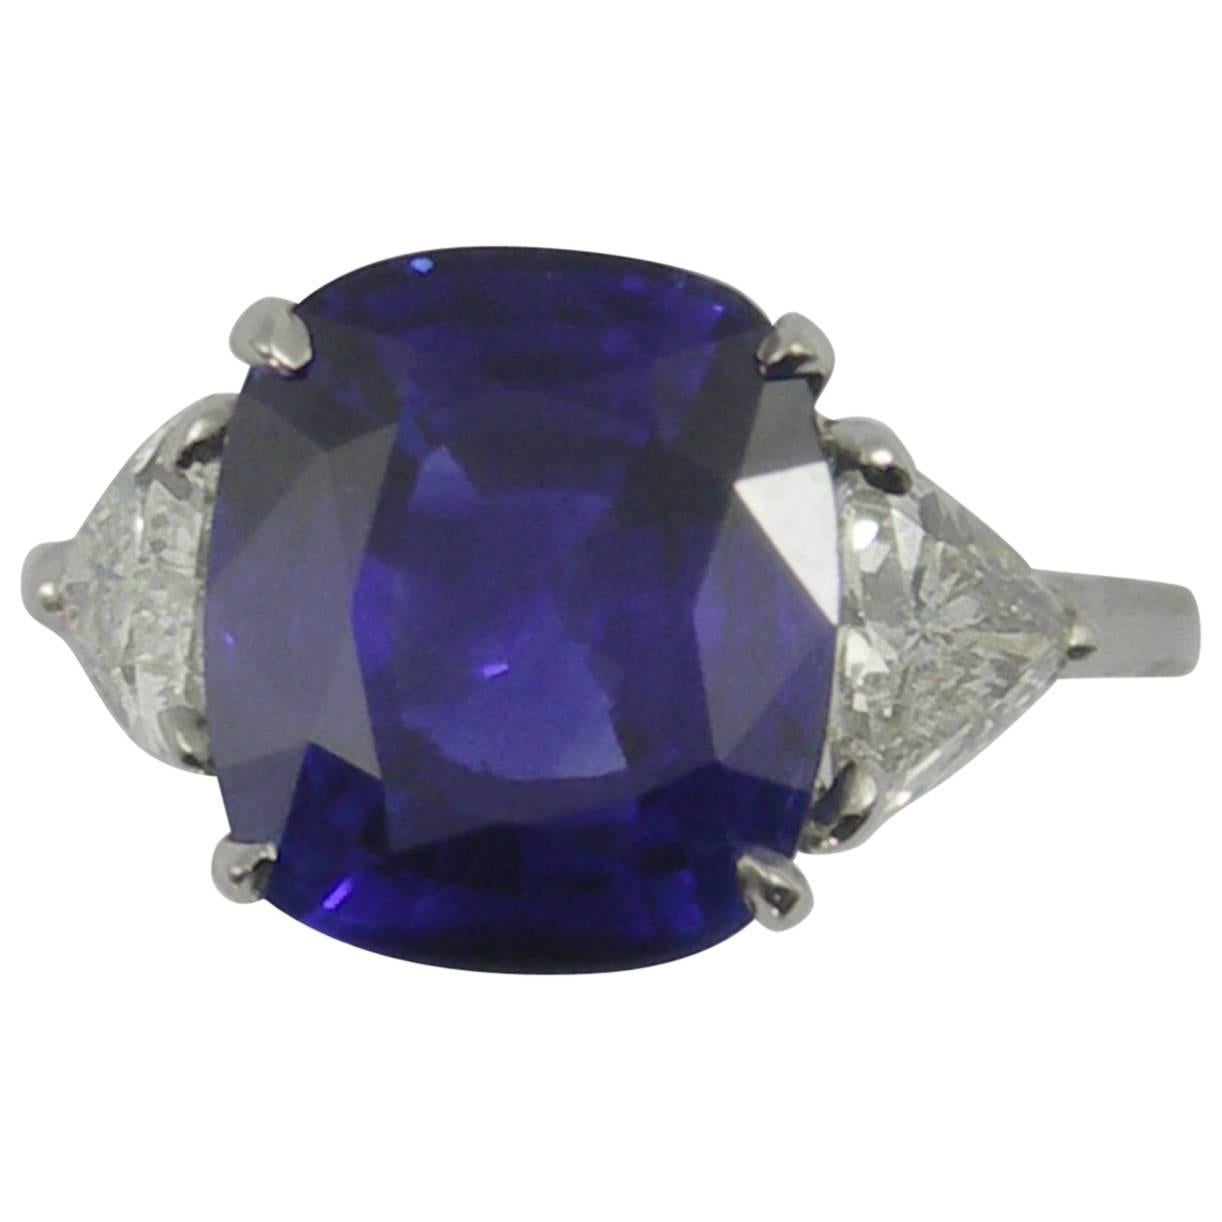 A.G.L. Certified 7.32 Carat Cushion Cut Sapphire Diamond Ring